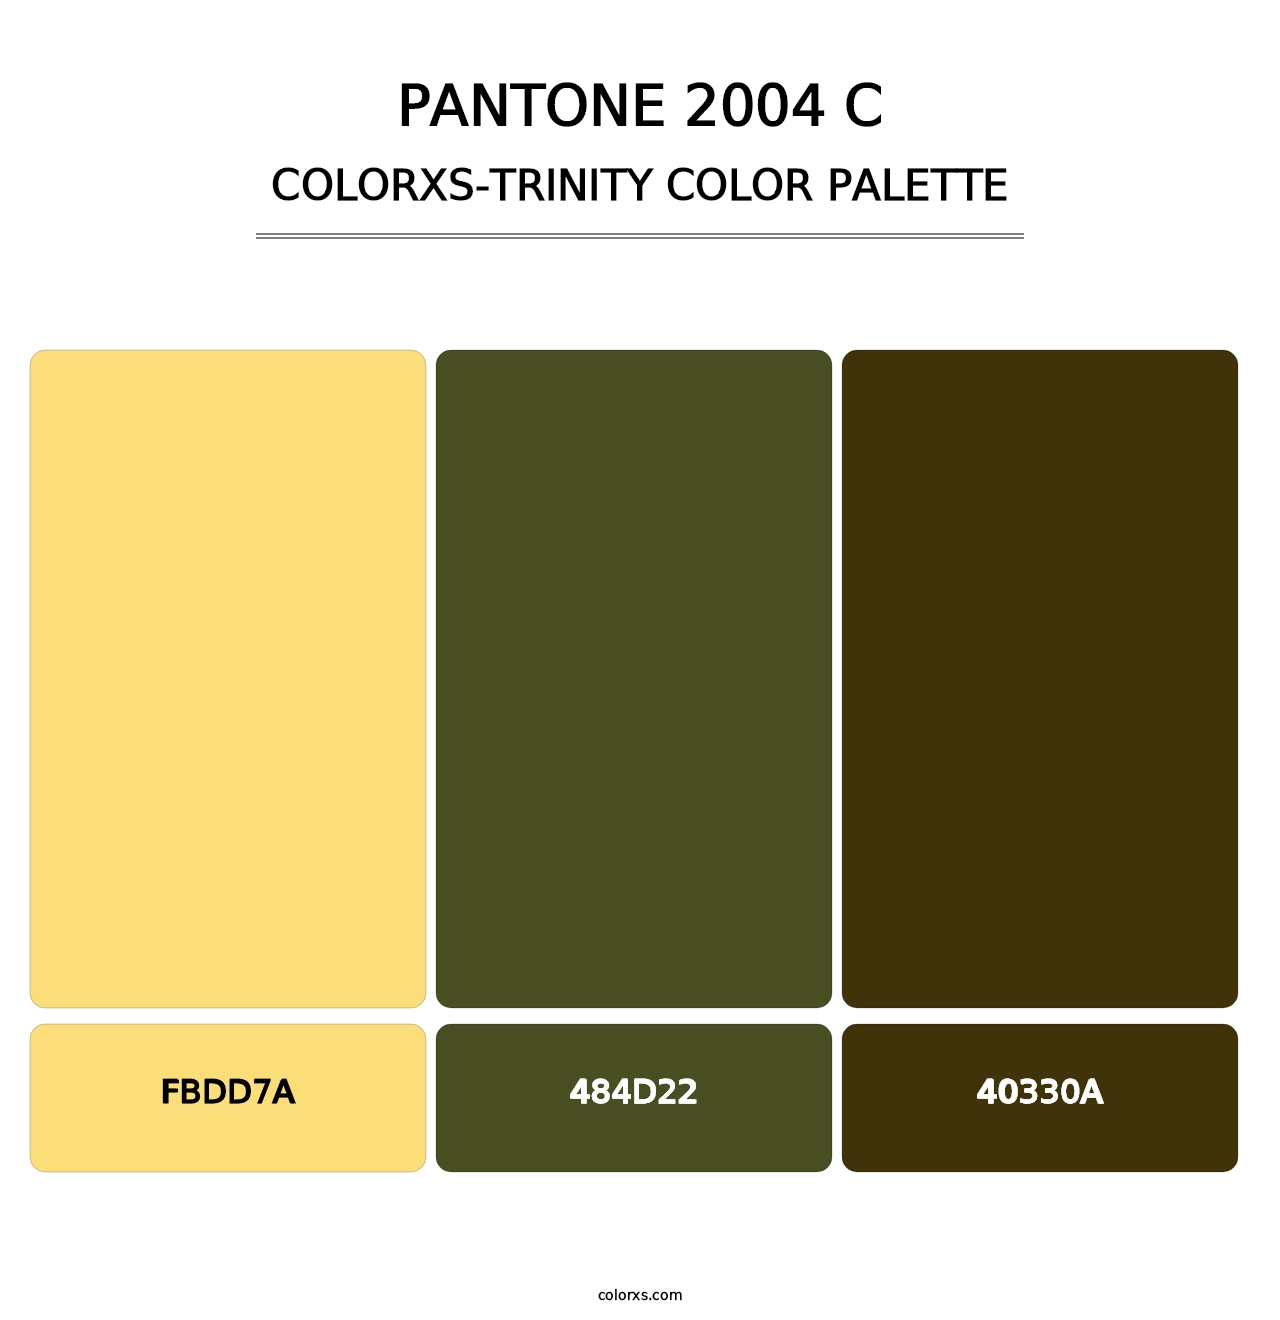 PANTONE 2004 C - Colorxs Trinity Palette